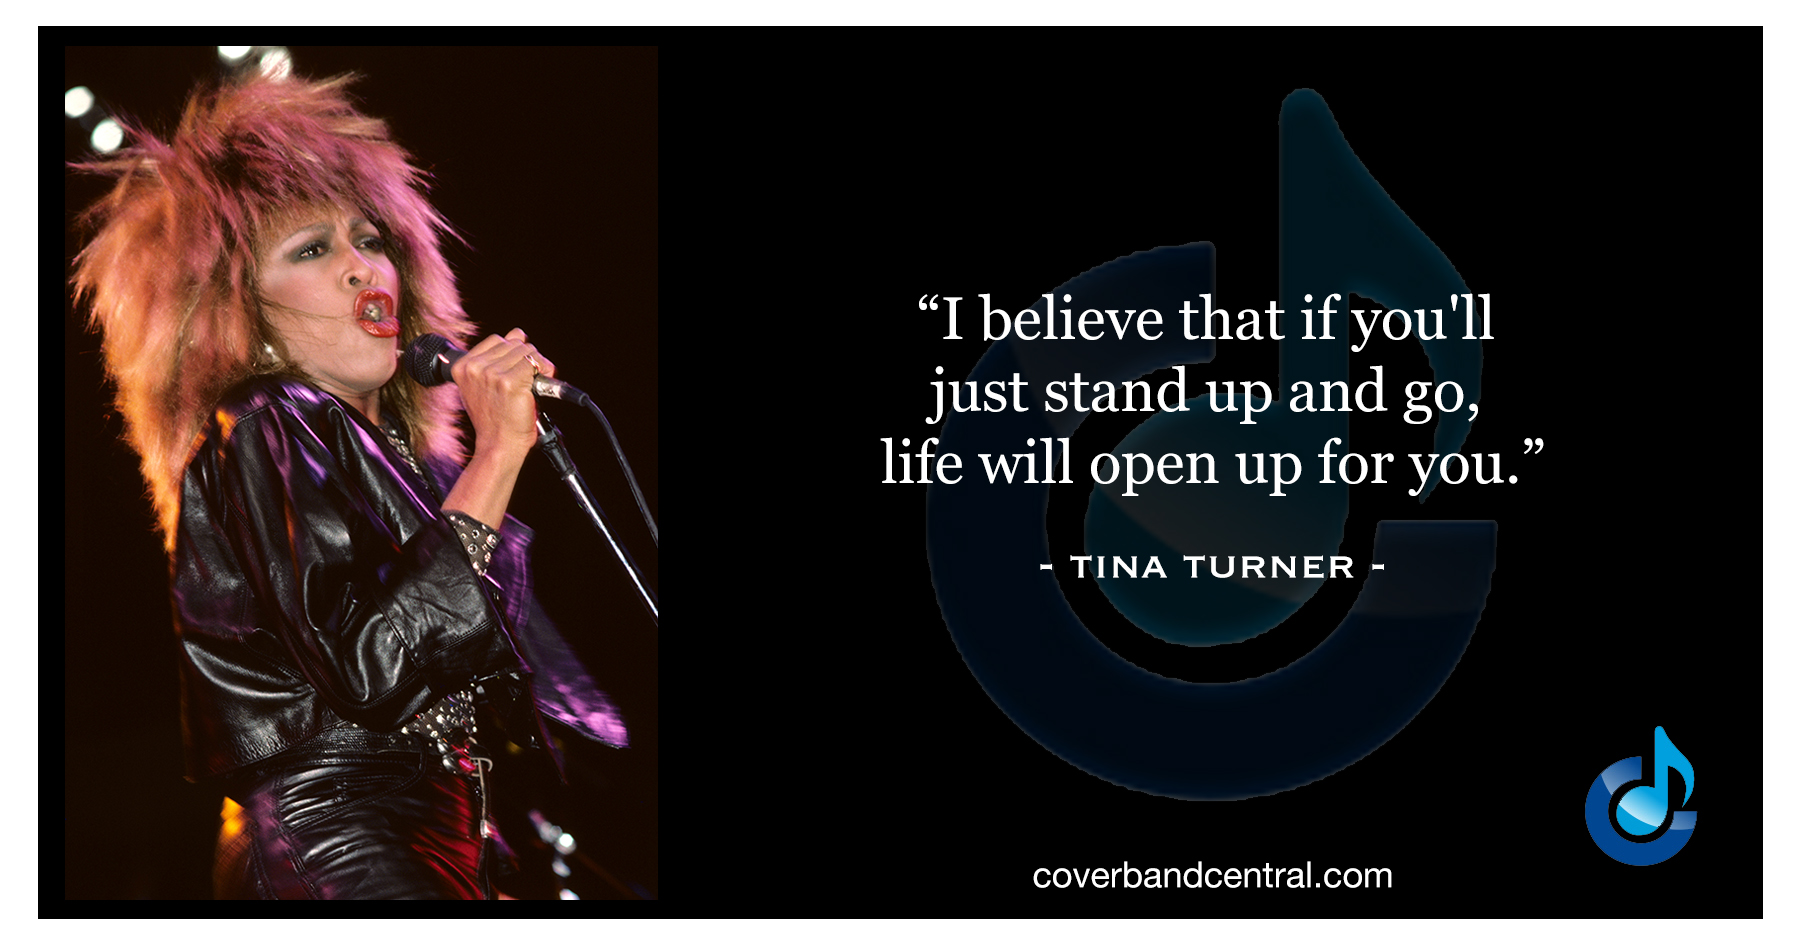 Tina Turner quote